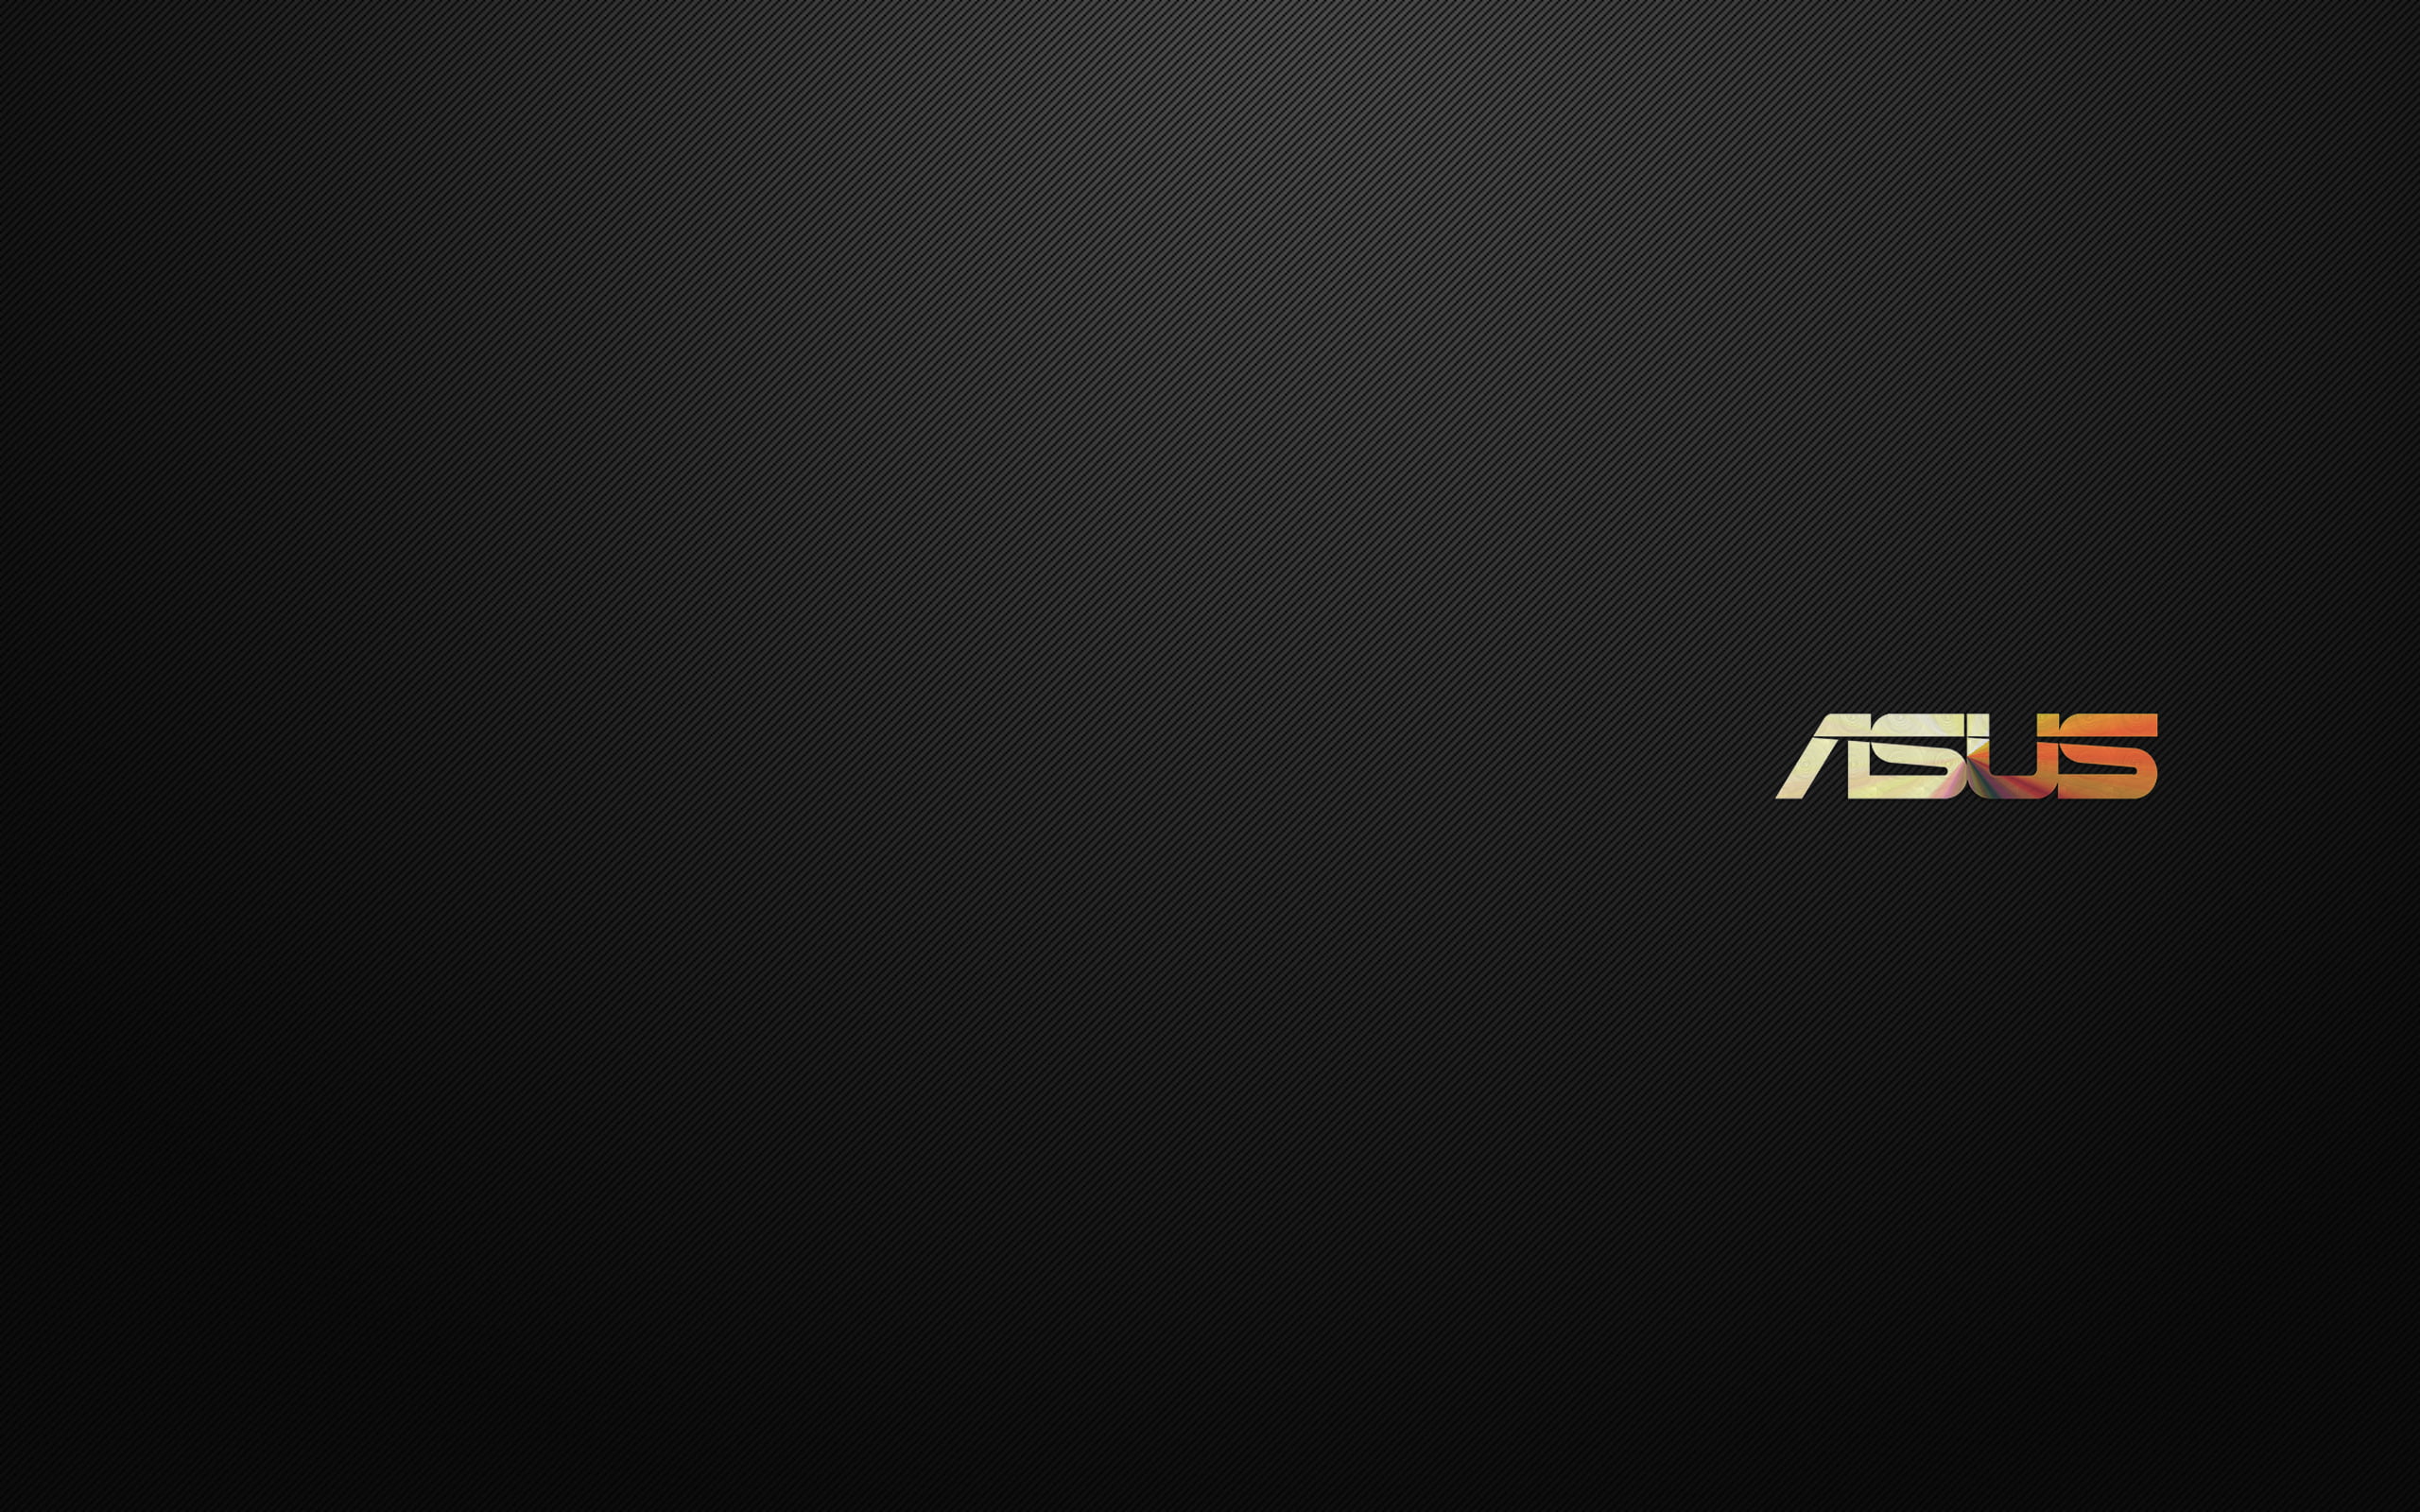 ASUS, logo, digital art, simple background, gradient